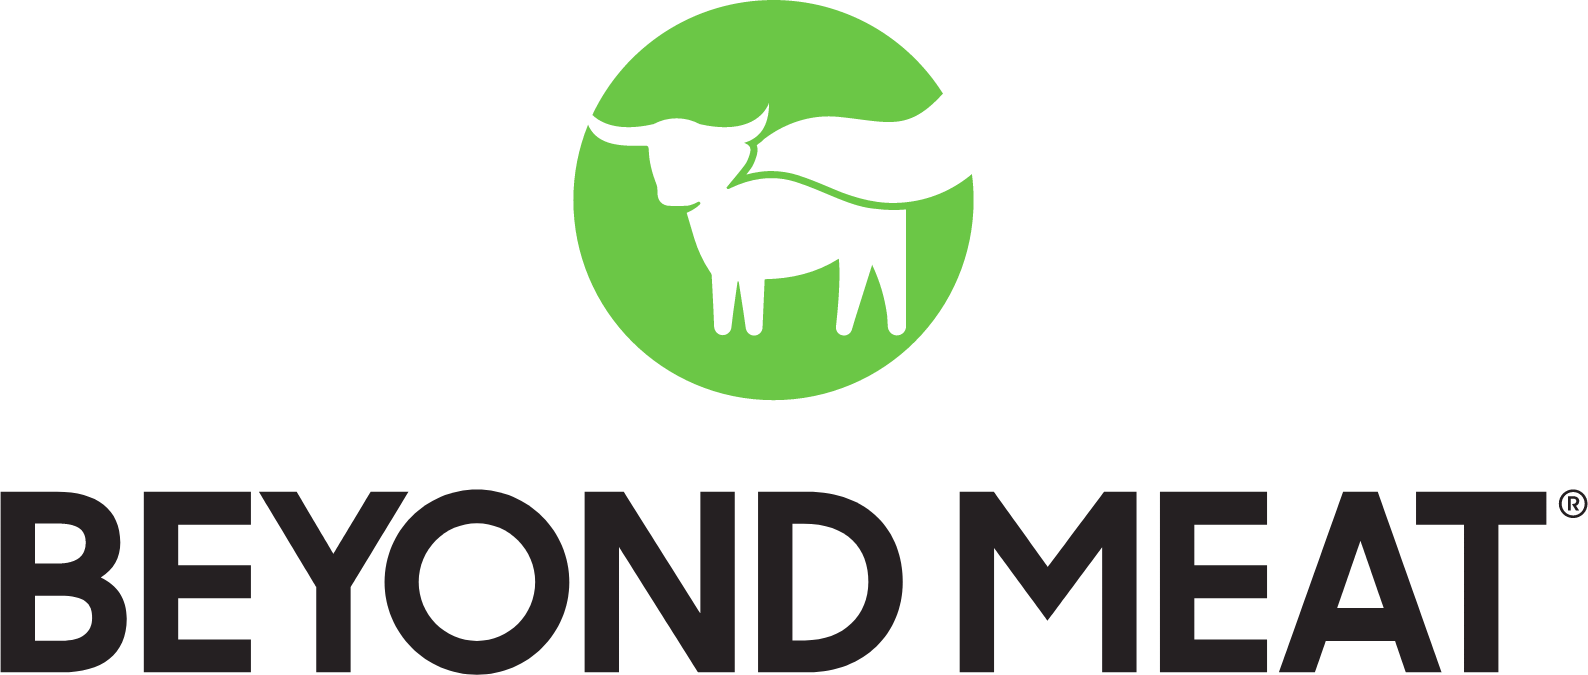 Beyond Meat logo large (transparent PNG)